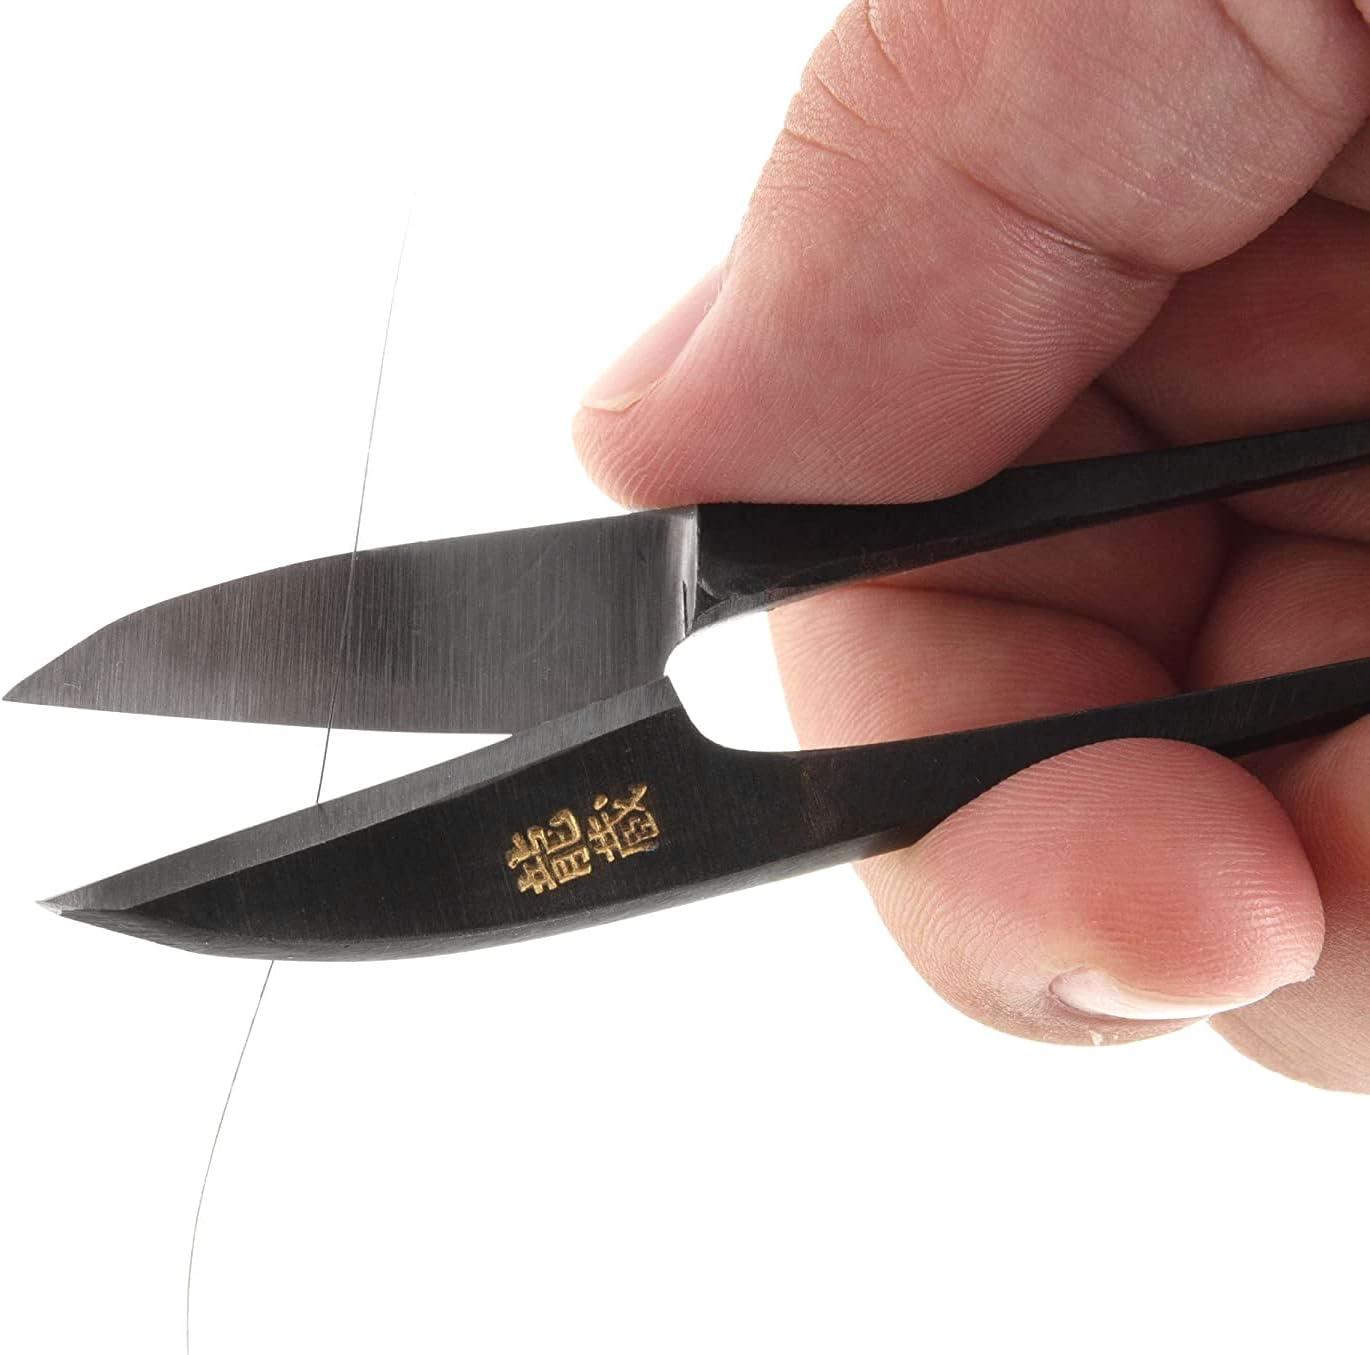 Japanese Thread Scissors - 105 mm 40 mm Blade - Thread Snips Nippers